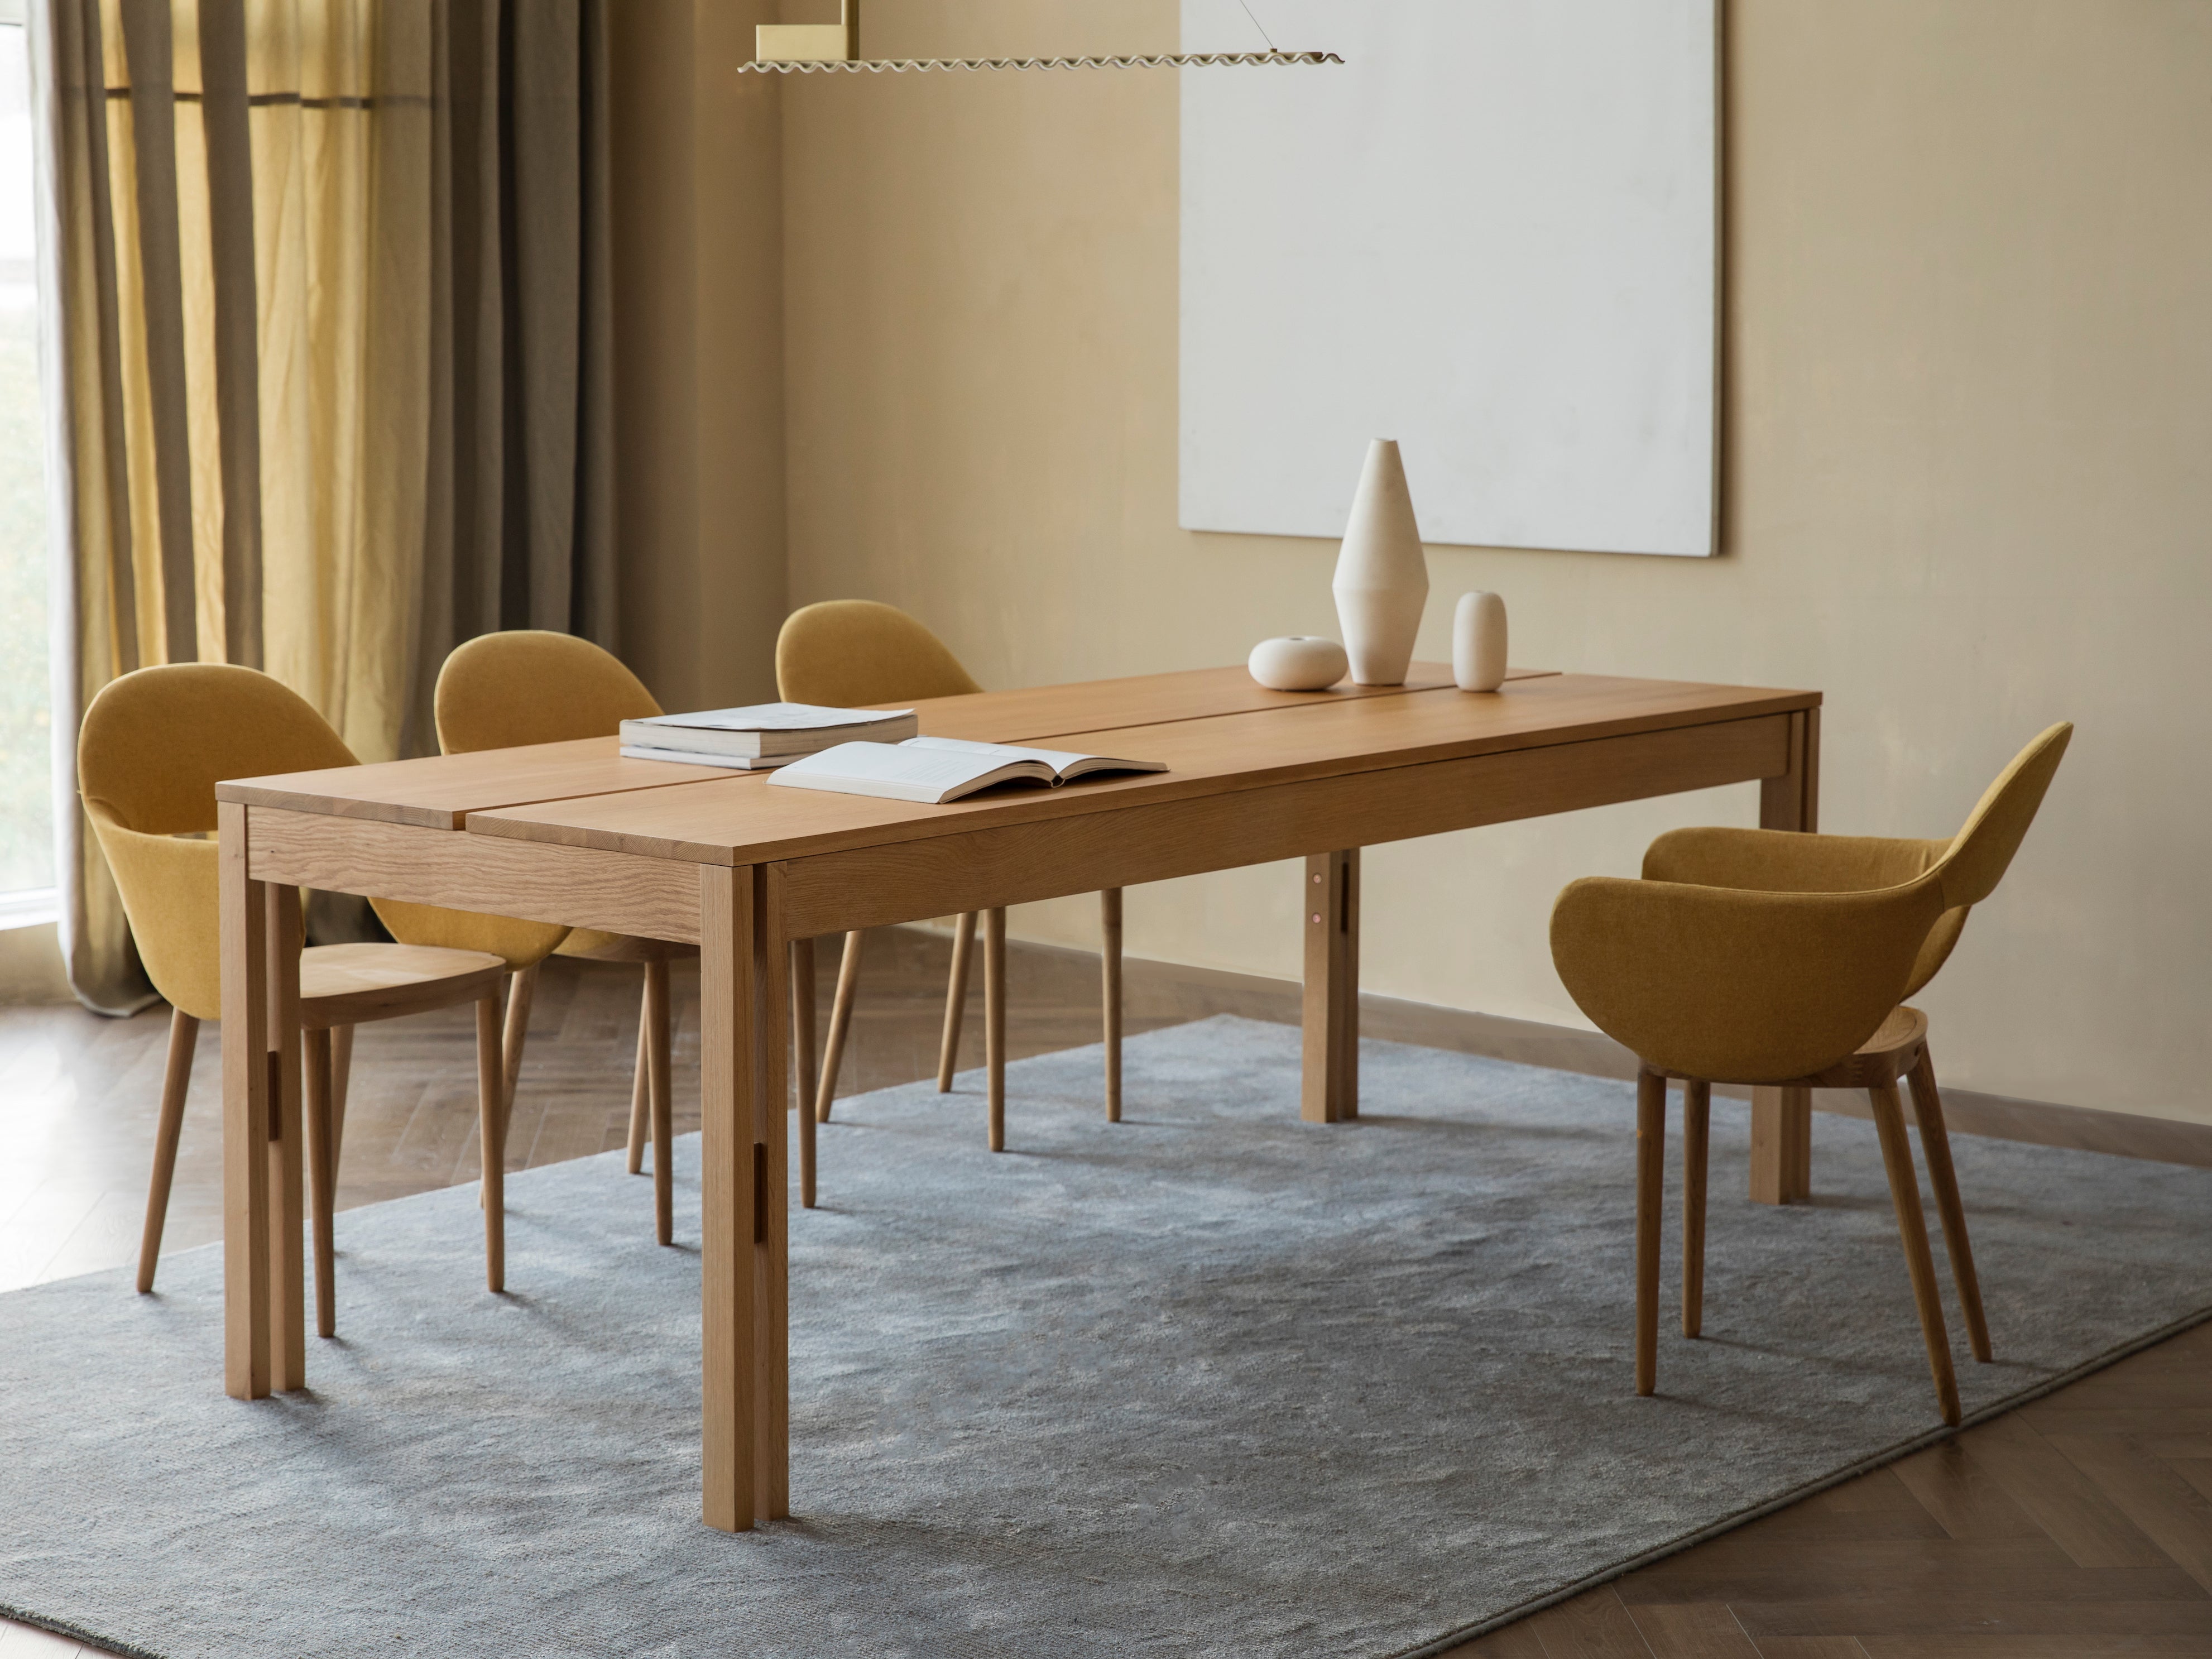 LINES RECTANGULAR TABLE Table Ziinlife Modern Design Furniture Hong Kong 